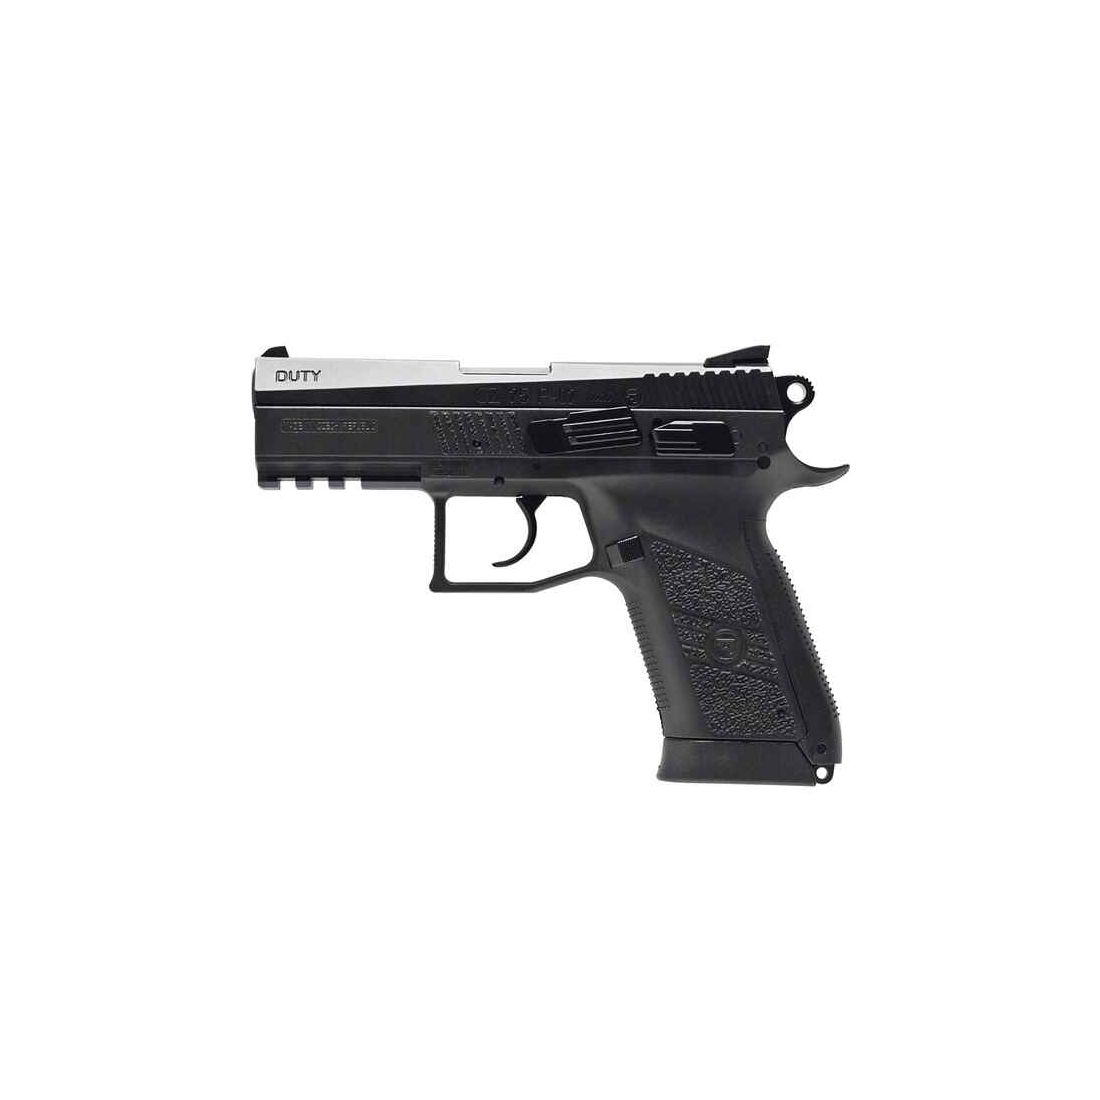 C02-Pistole CZ75 P-07 Duty Kaliber 4,5mmBB Blow Black